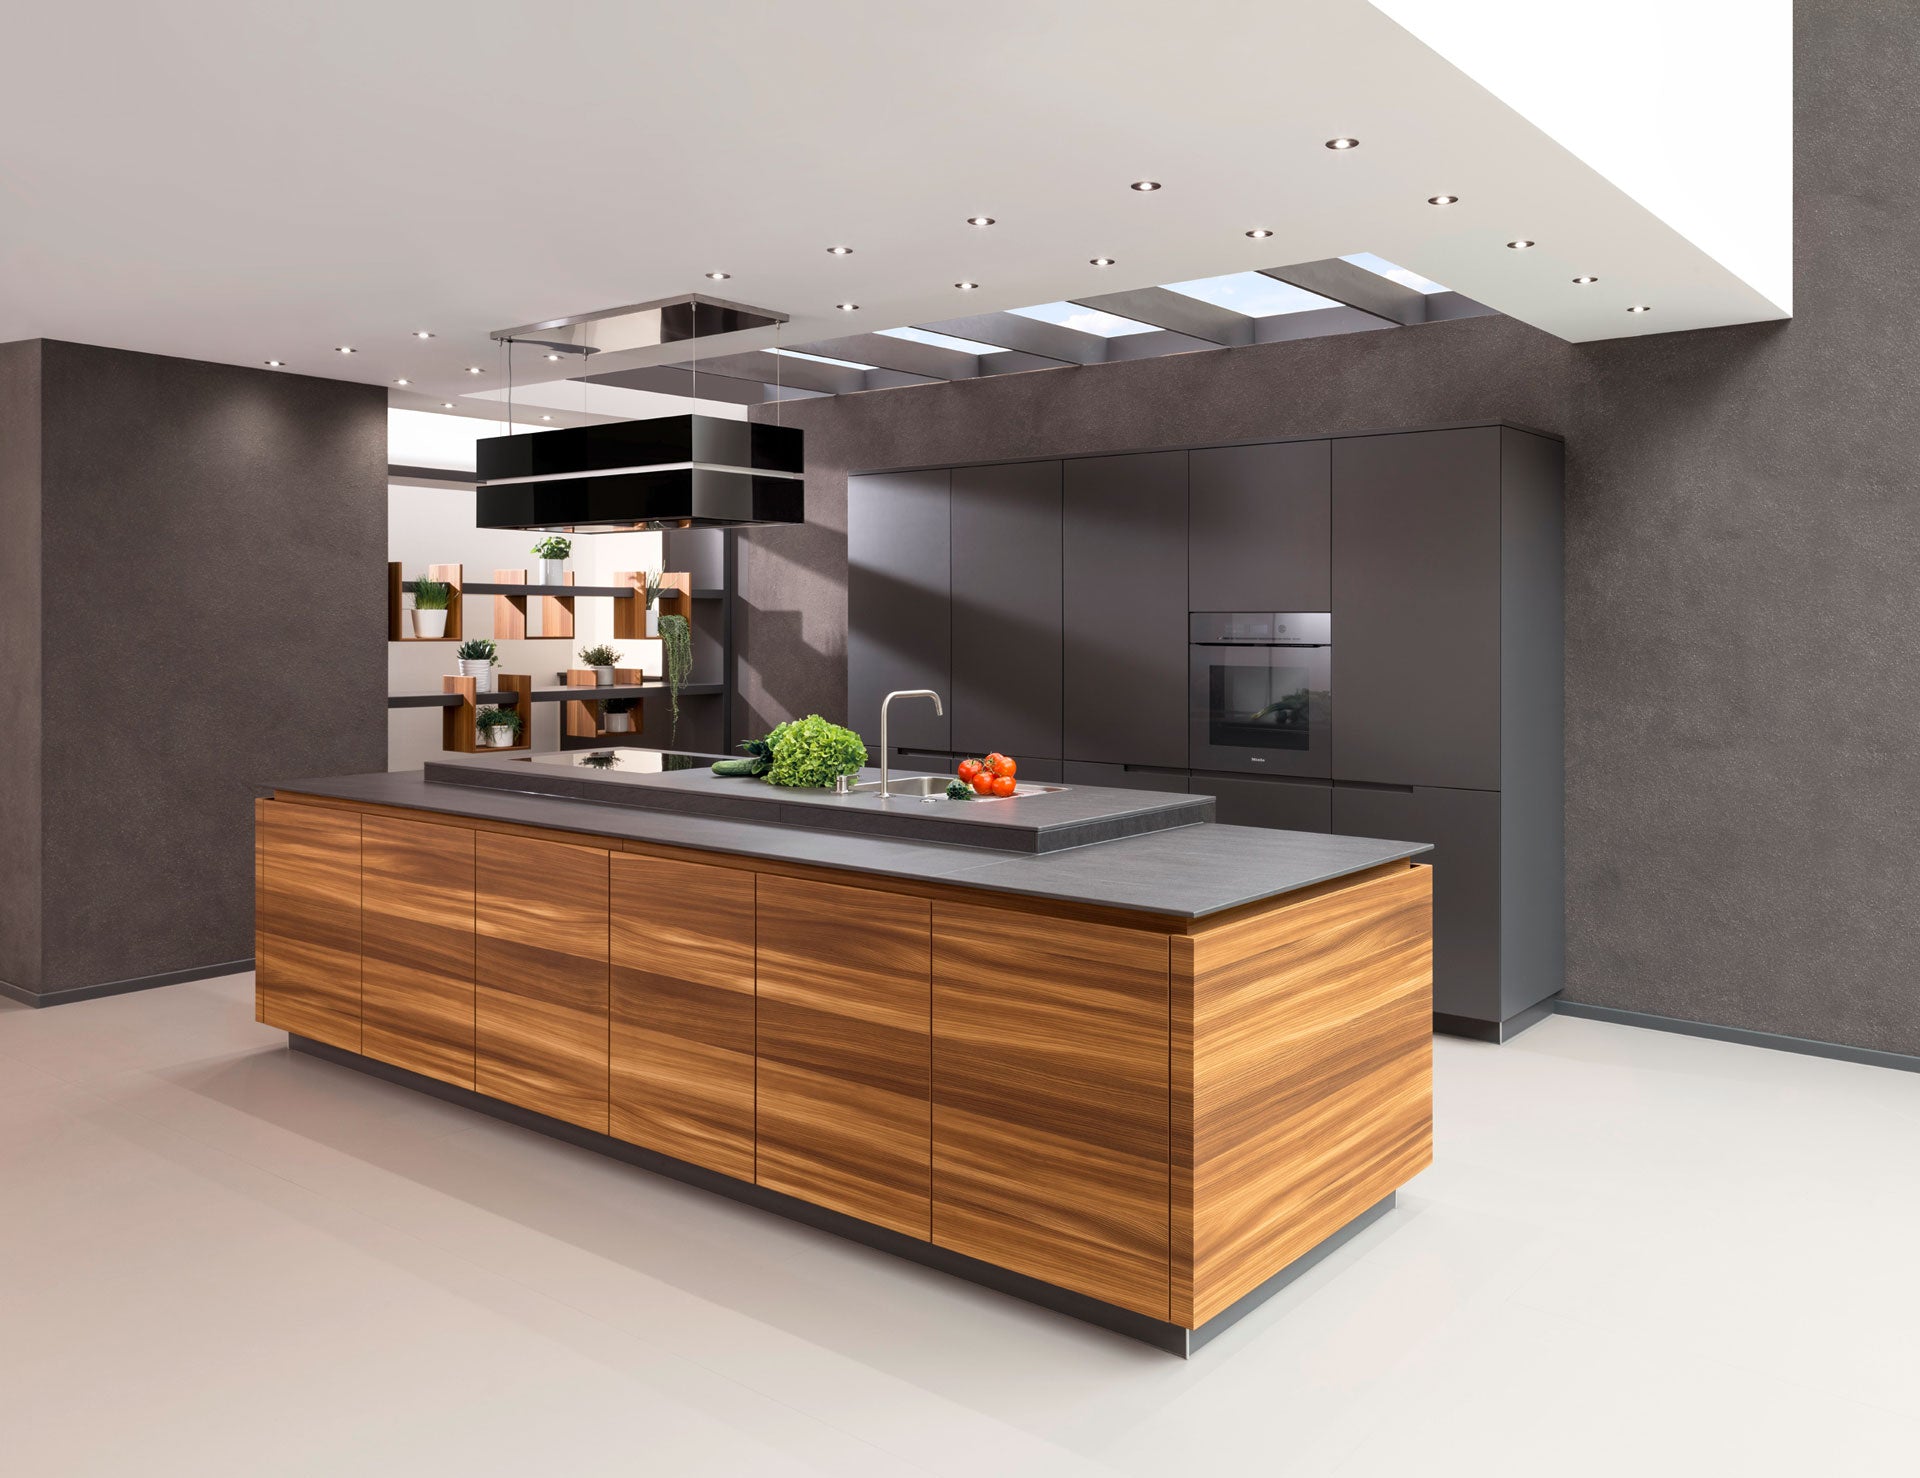 Rempp Küchen sáng tạo module bếp “Arco” sử dụng ván veneer